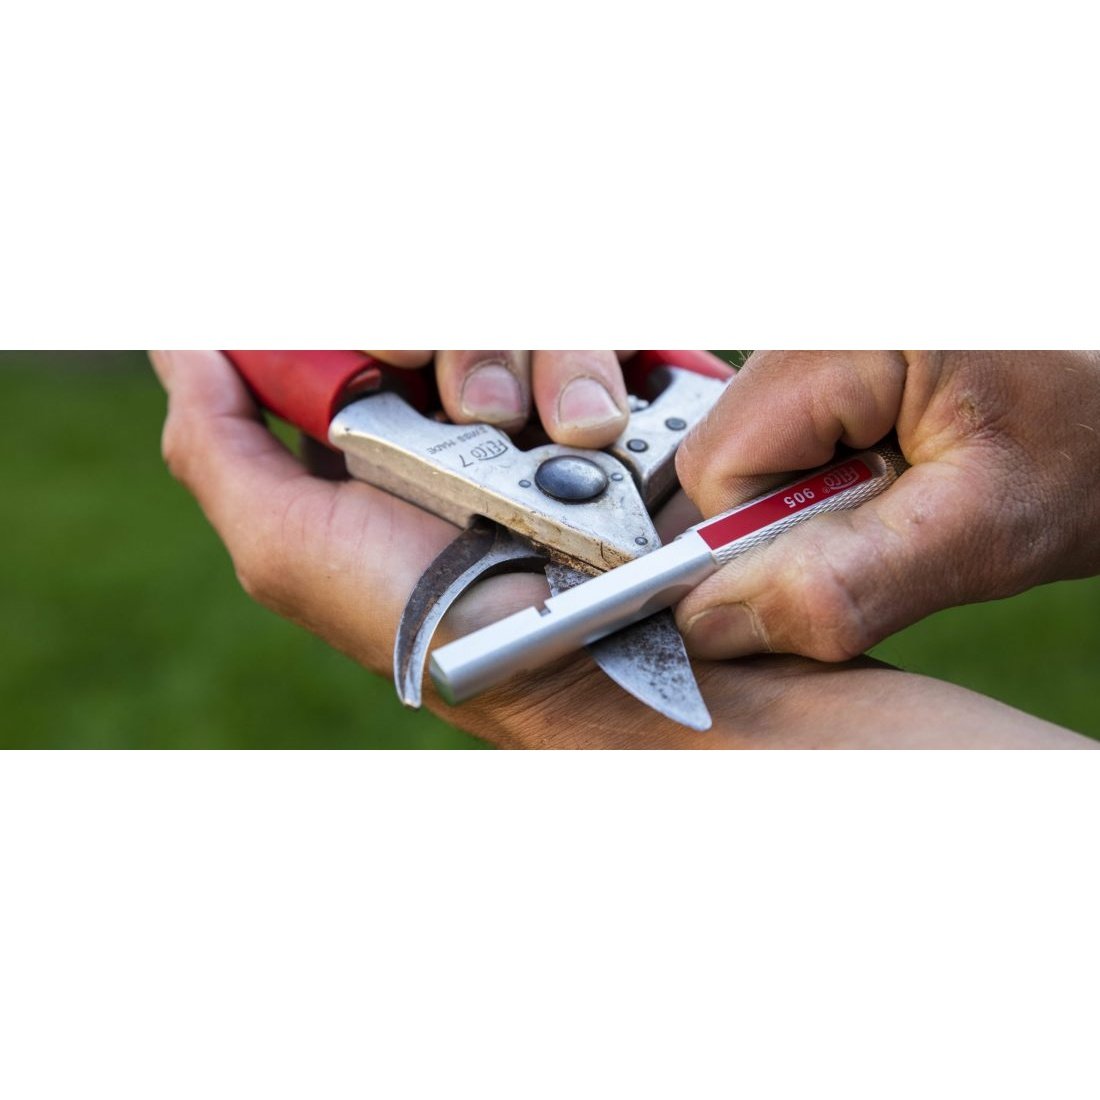 Felco 905 Honing, Sharpening and Adjusting tool